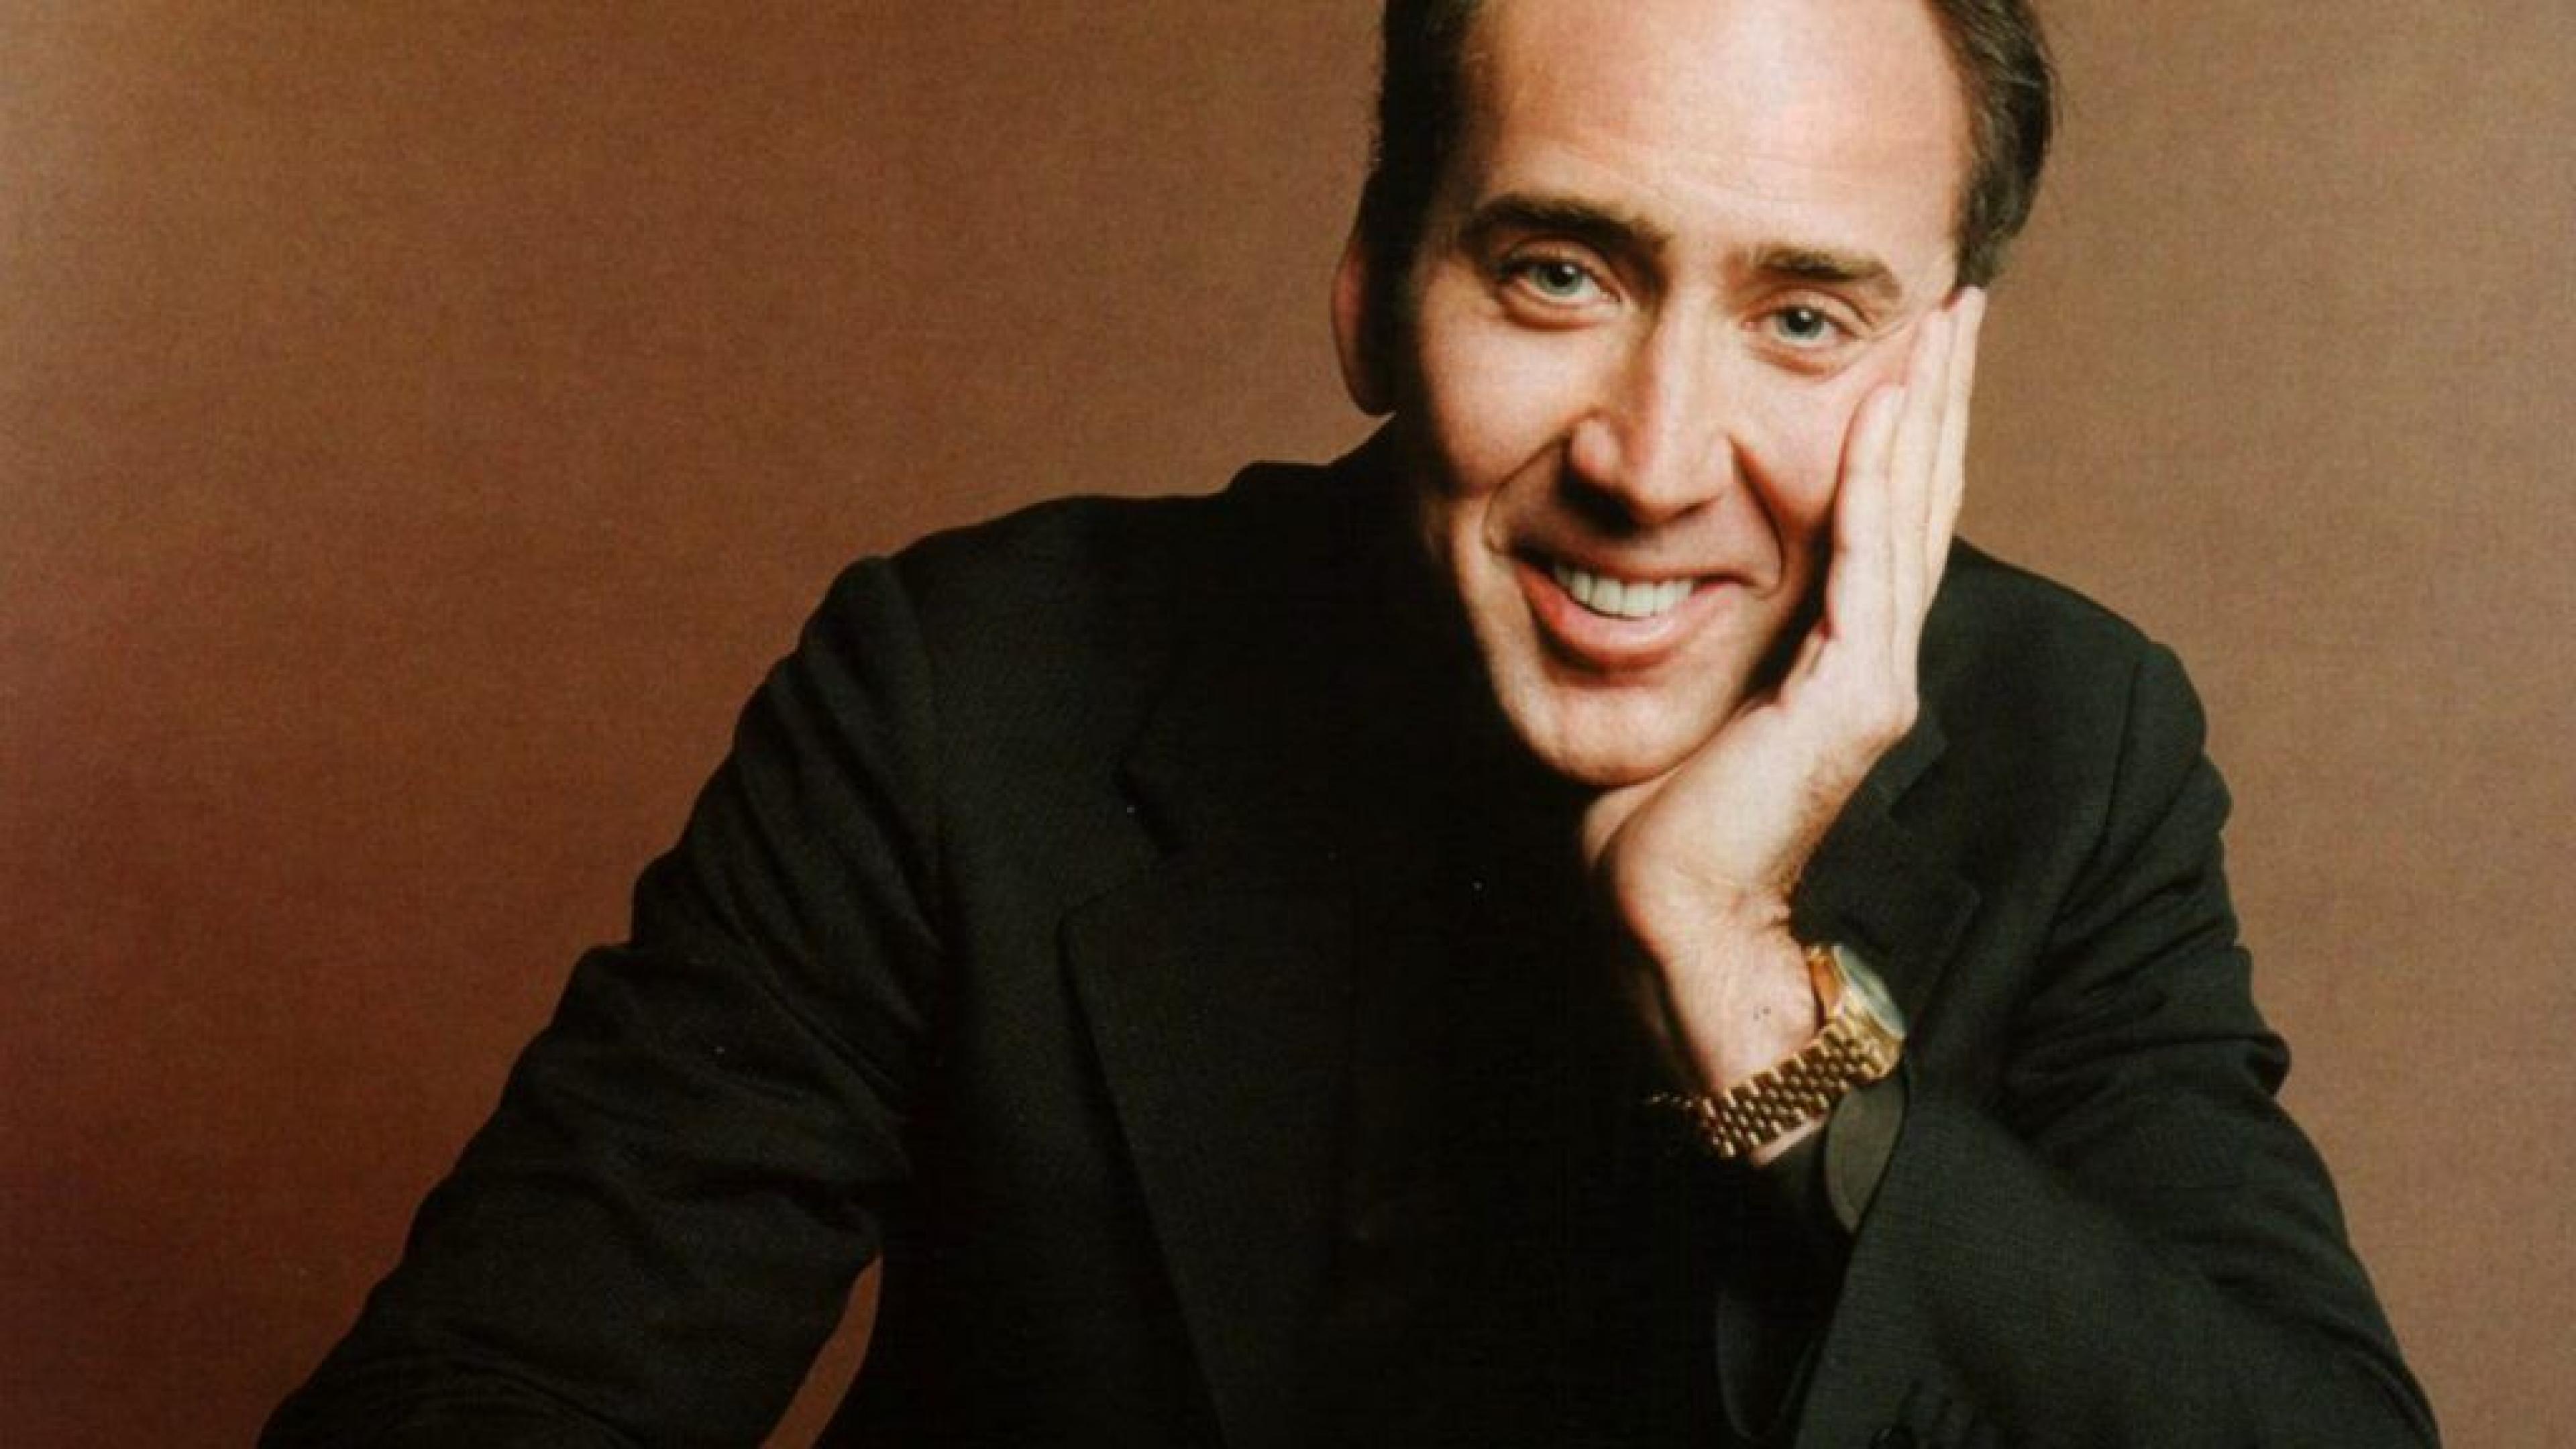 Nicolas Cage Wallpaper, Picture, Image